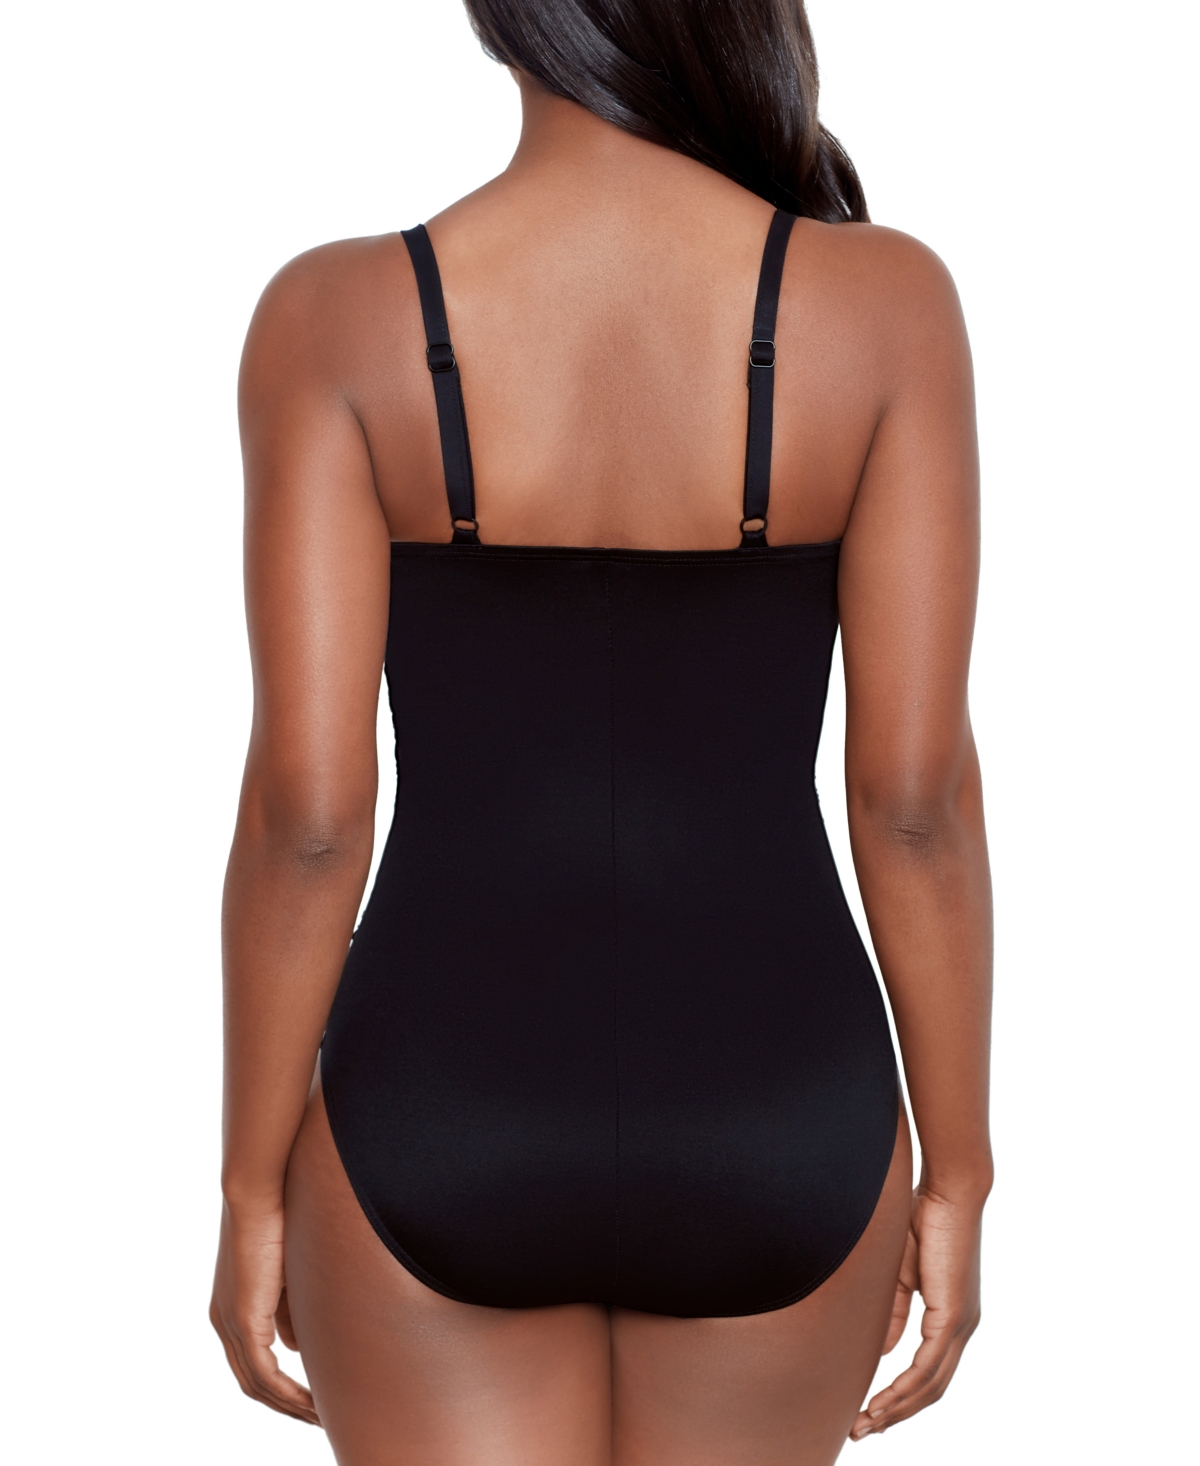 Shop Miraclesuit Women's Iridium Mystique Underwire One-piece Swimsuit